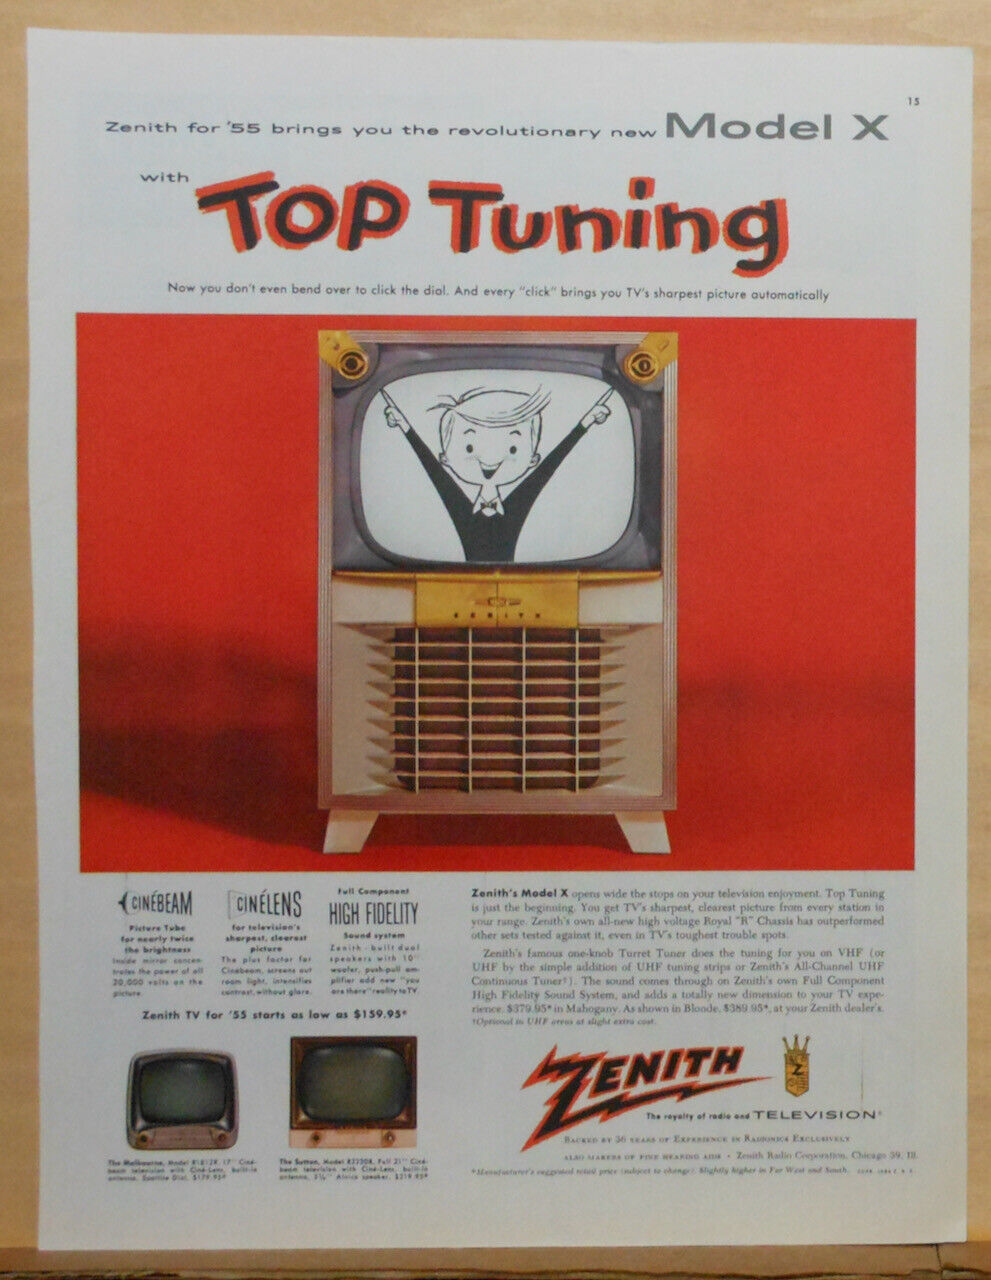 1954 magazine ad for Zenith Televison Set - revolutionary Model X, Top Tuning